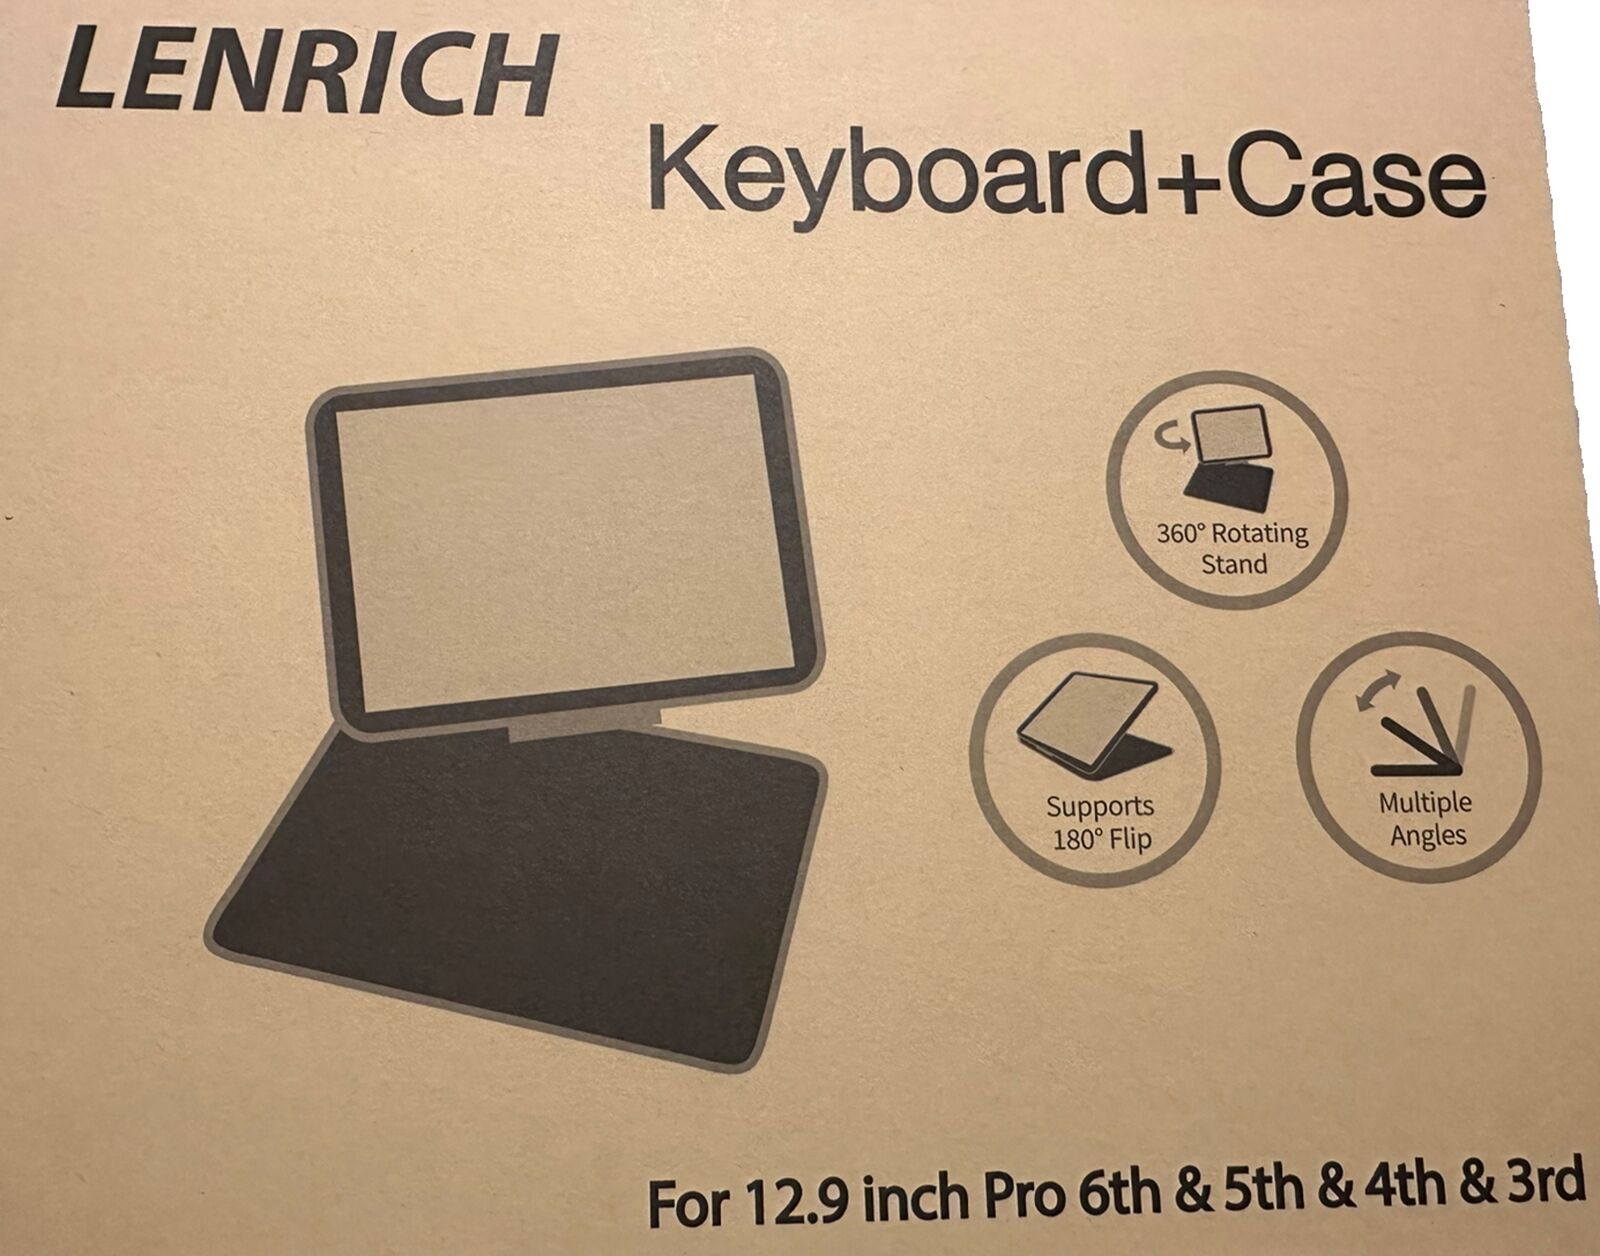 Ipad Keyboard 12.9 New 4,5,6th Generation Pink